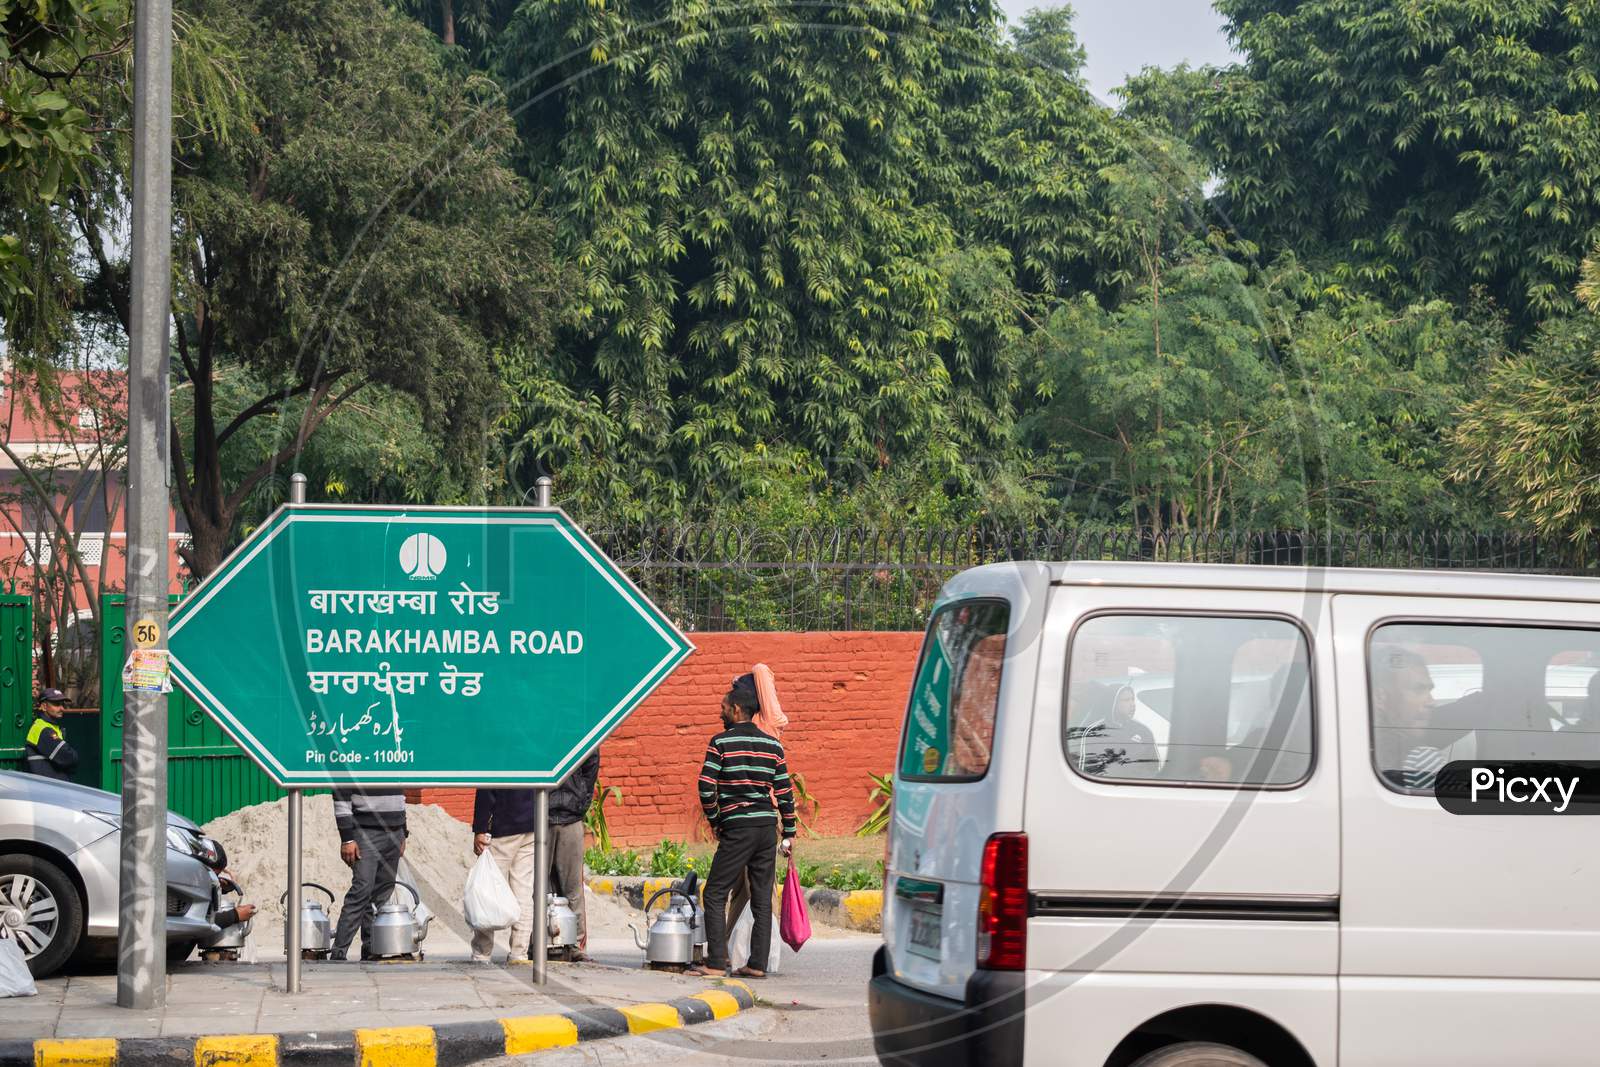 Barakhamba Road sign board